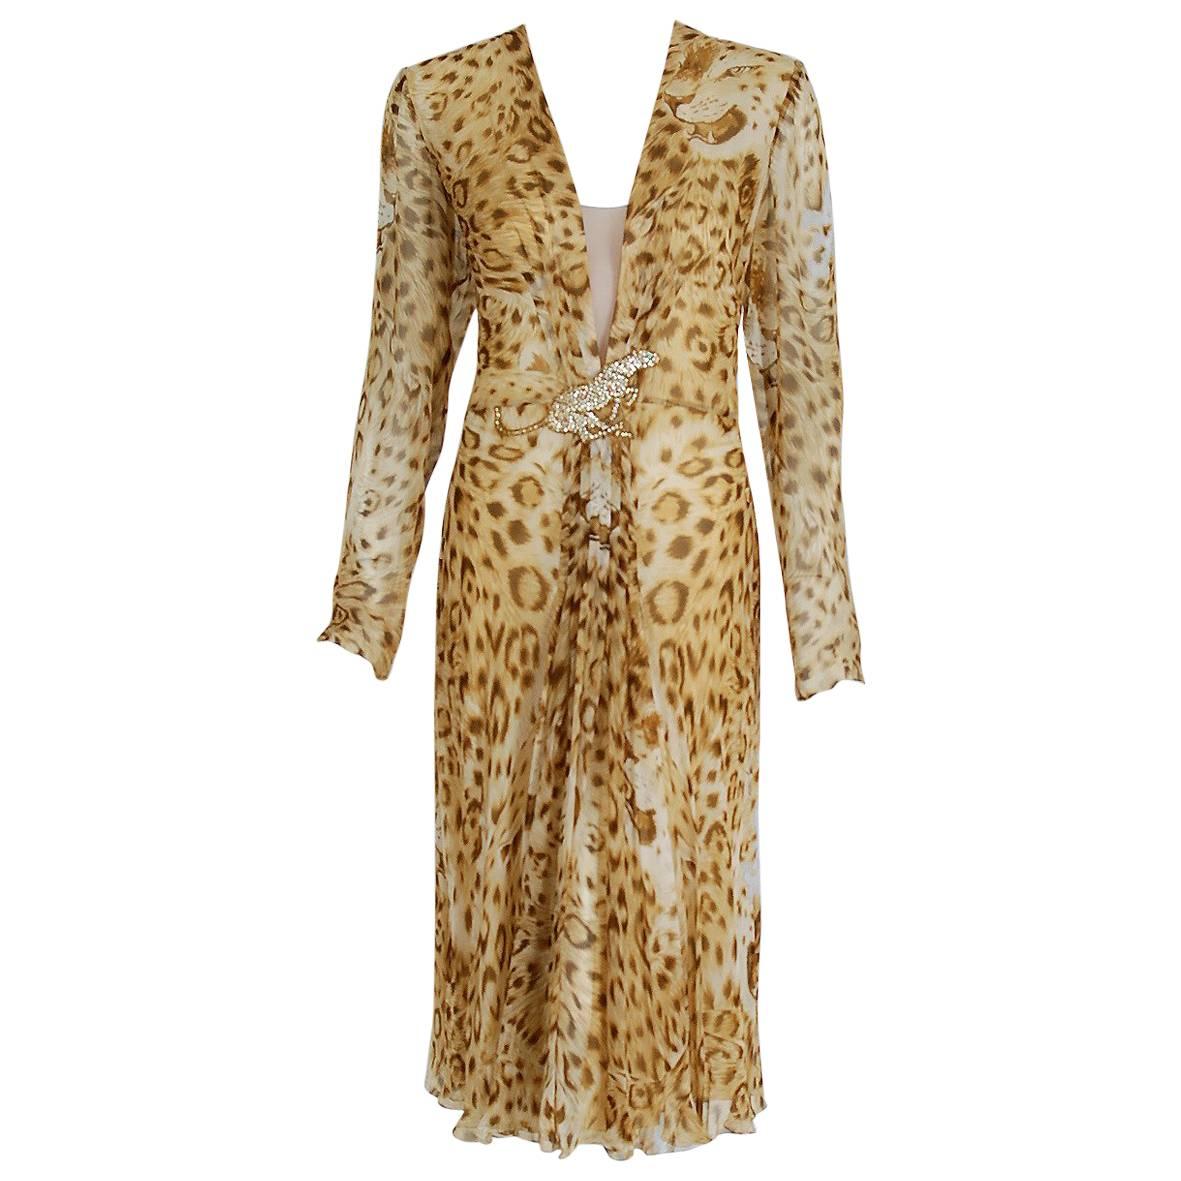 1977 Hanae Mori Couture Leopard Animal Print Chiffon Rhinestone Plunge Dress